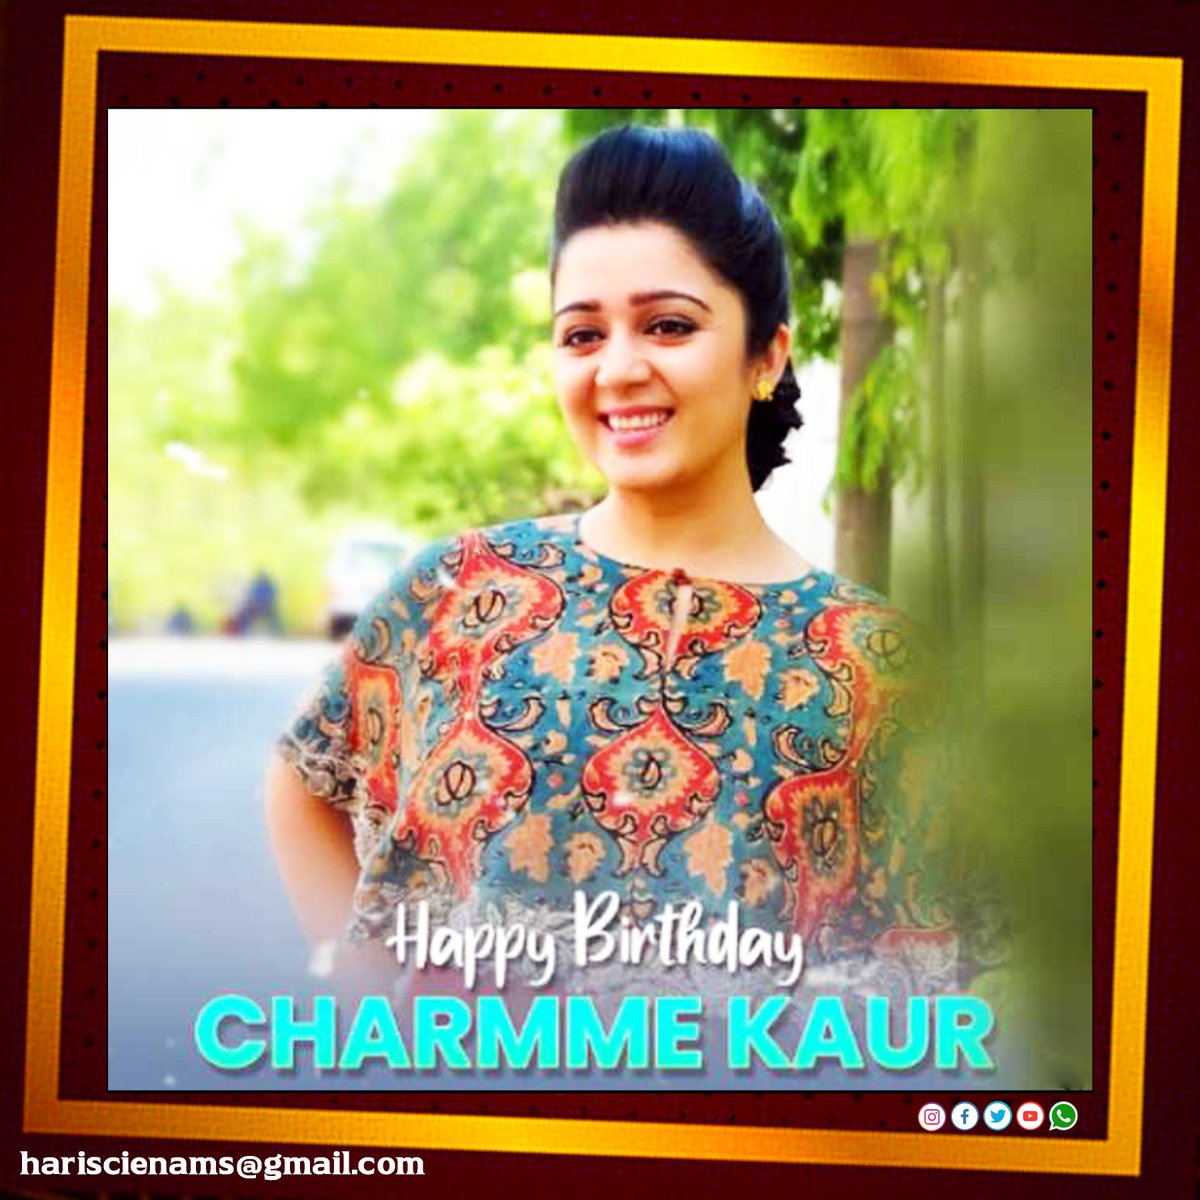 Wishing a Happy Birthday To Actress @Charmmeofficial
#Charmikaur #HBDCharmikaur #HappyBirthdayCharmikaur #hariscinemas